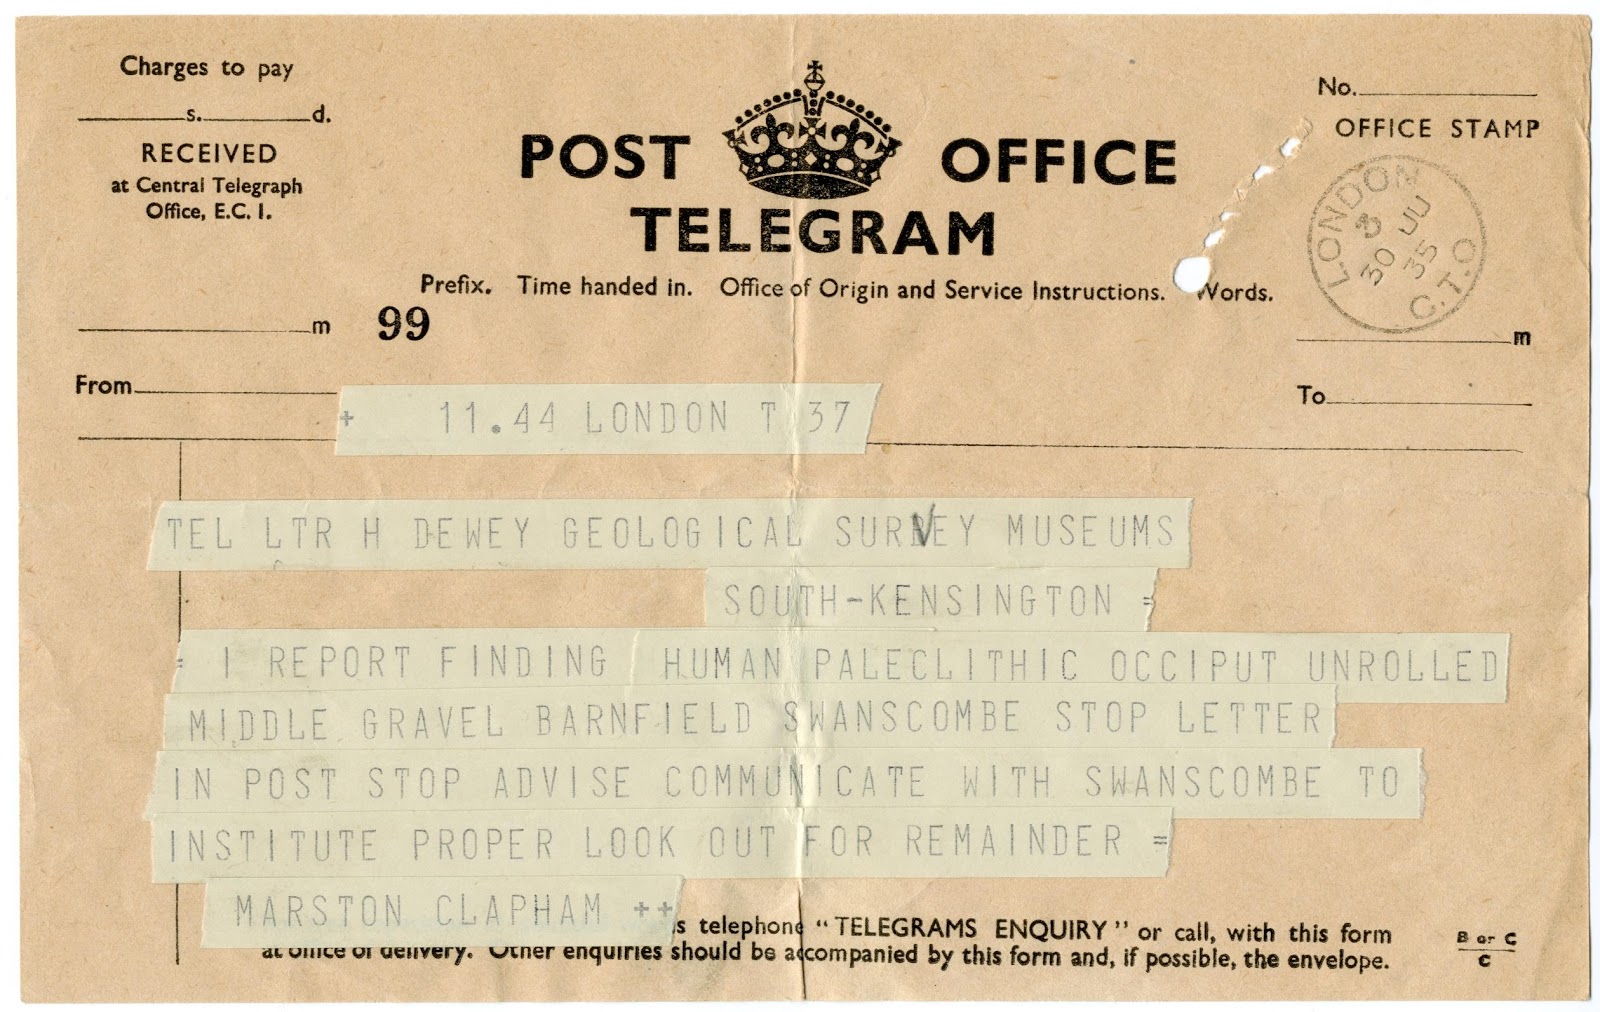 Вождь телеграмм телеграм. Офис телеграмма. Телеграмм сокращенно. Телеграмма Центральный Телеграф. Post Office Telegram.